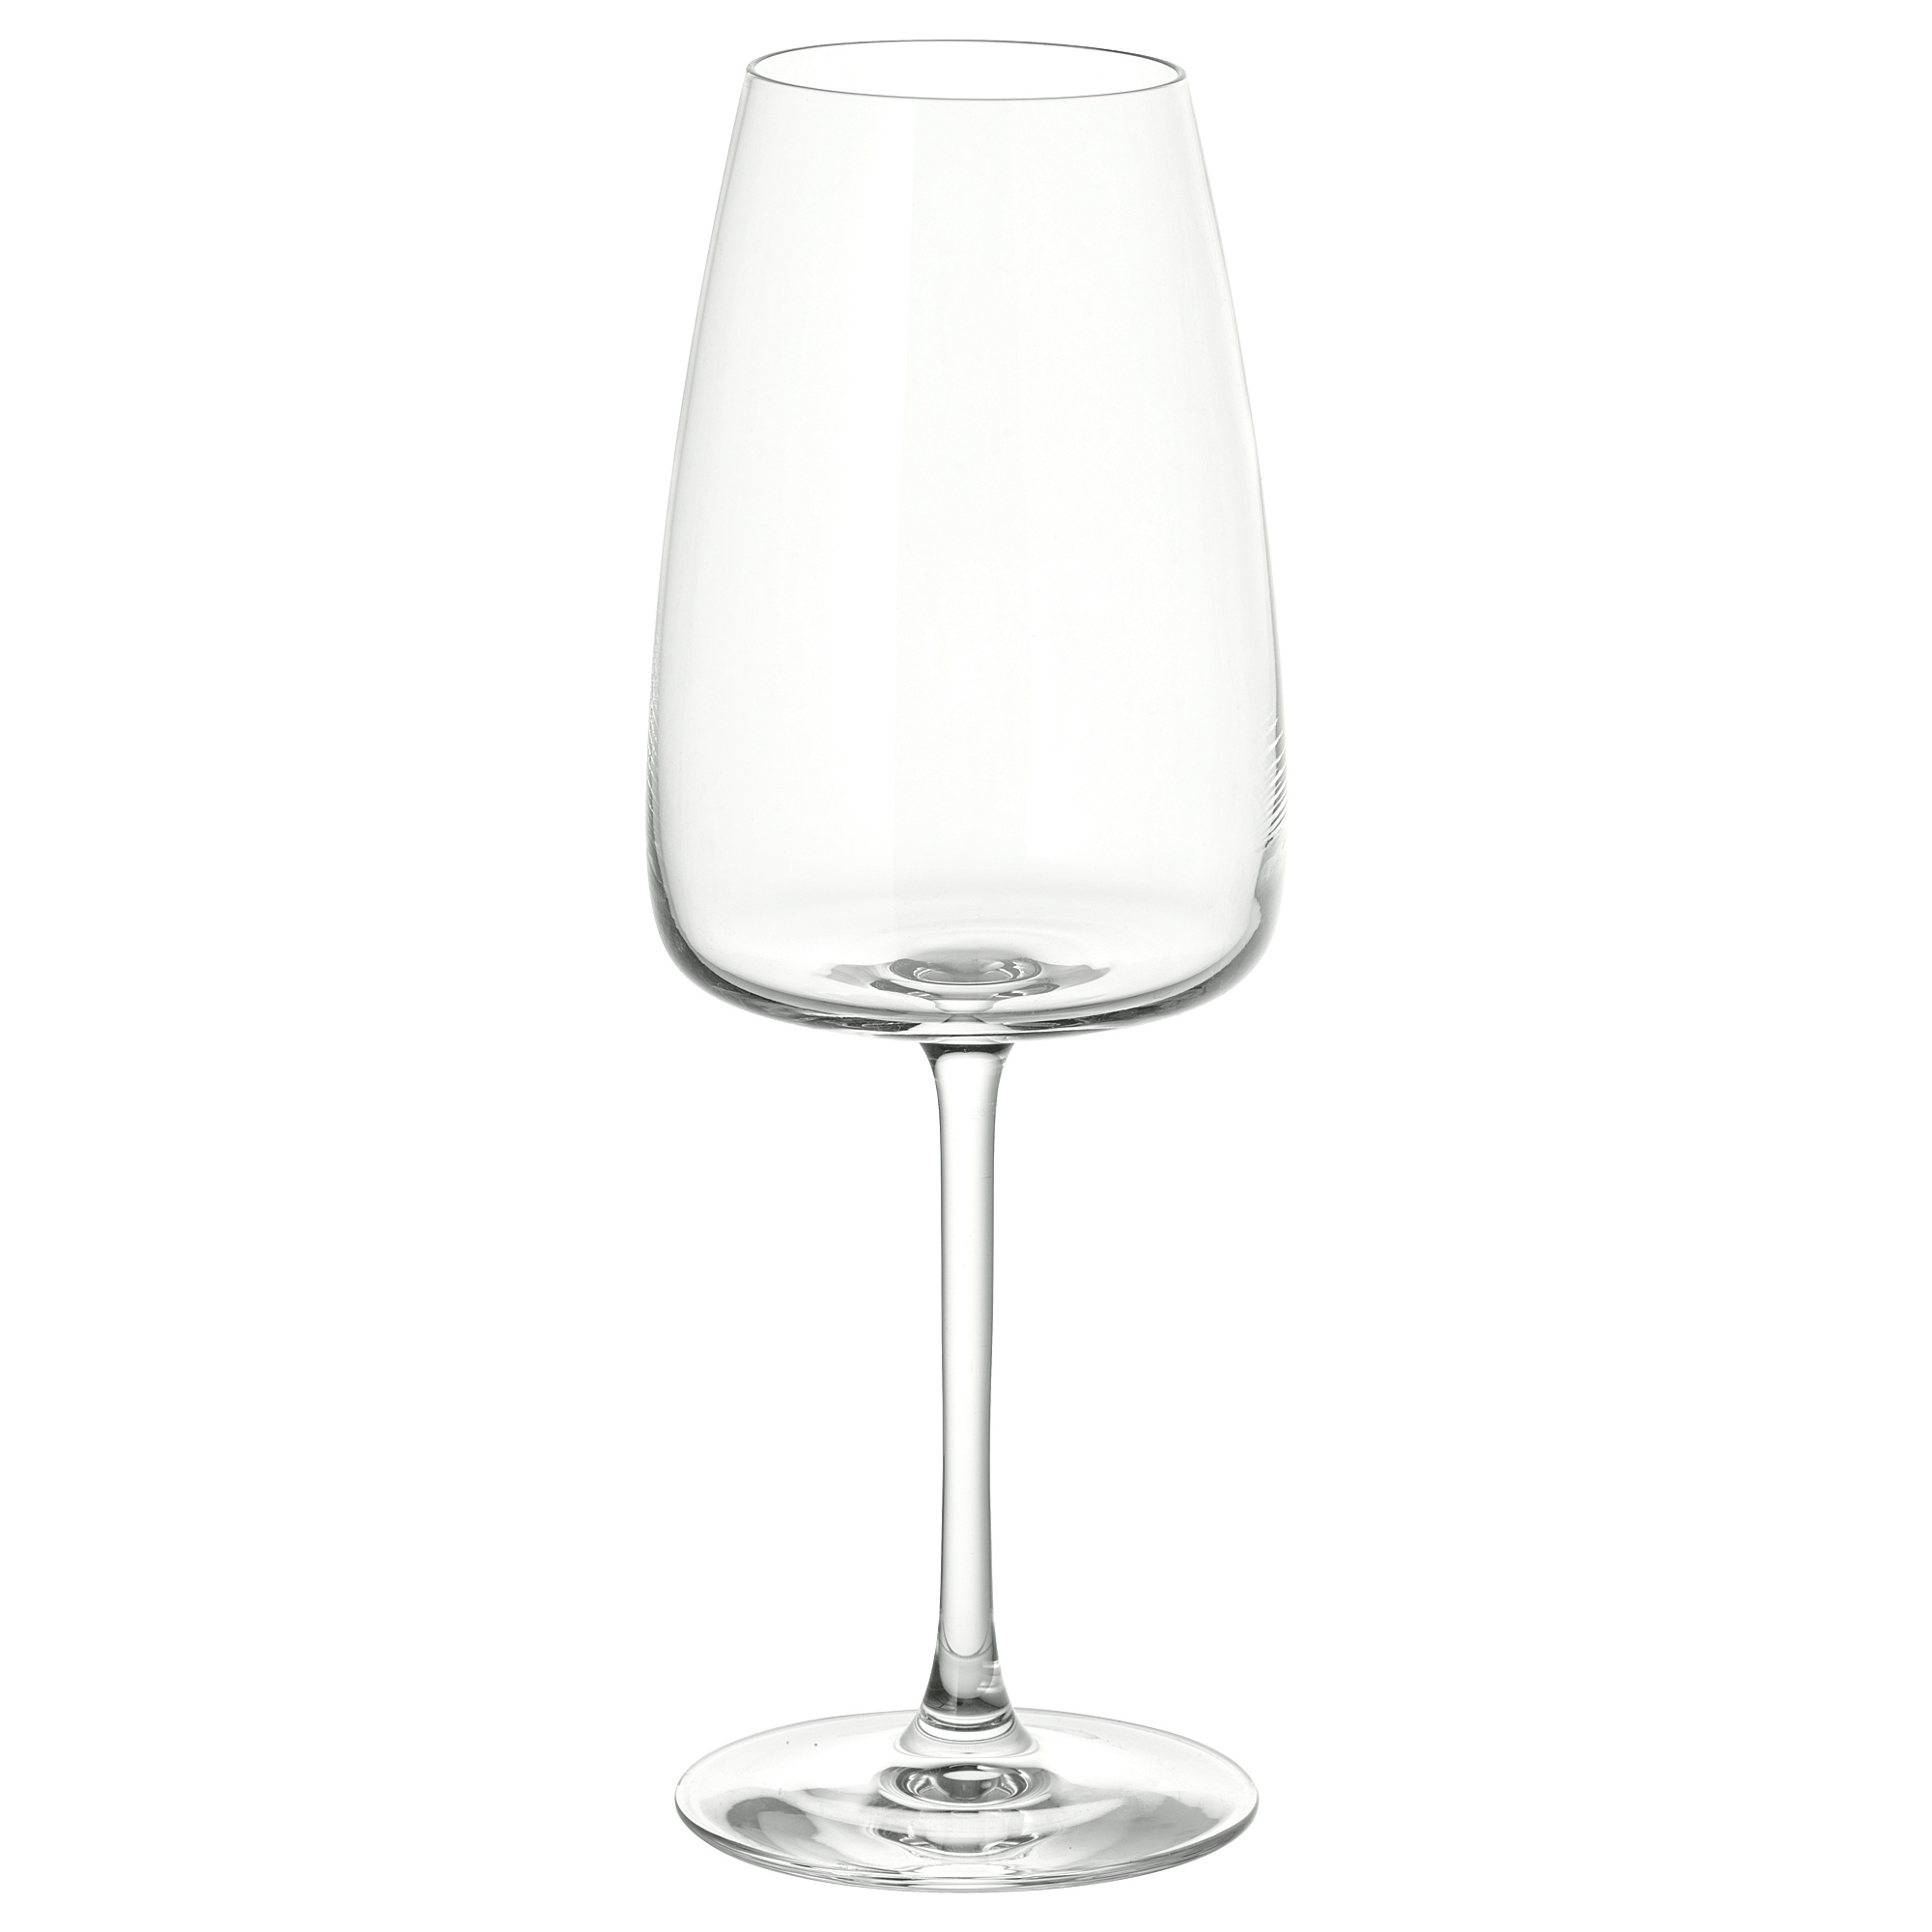 DYRGRIP white wine glass